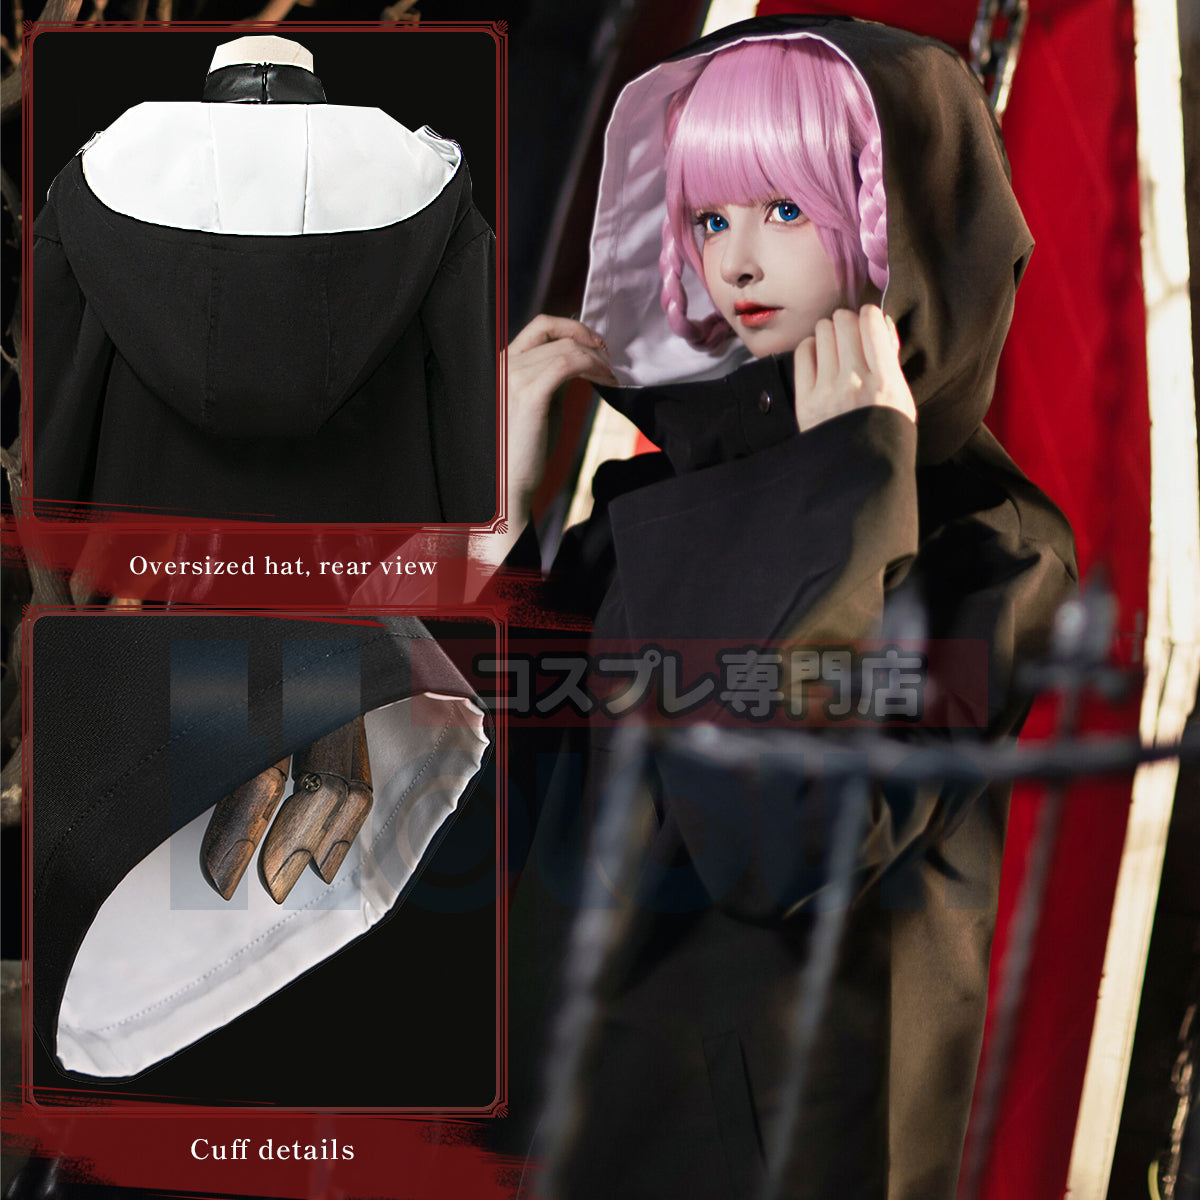 HOLOUN Call of The Night Anime Cosplay Costume Nazuna Nanakusa Vampire Black Coat Cloak Vest Outfit Wig Light Pink Braid Hair Halloween